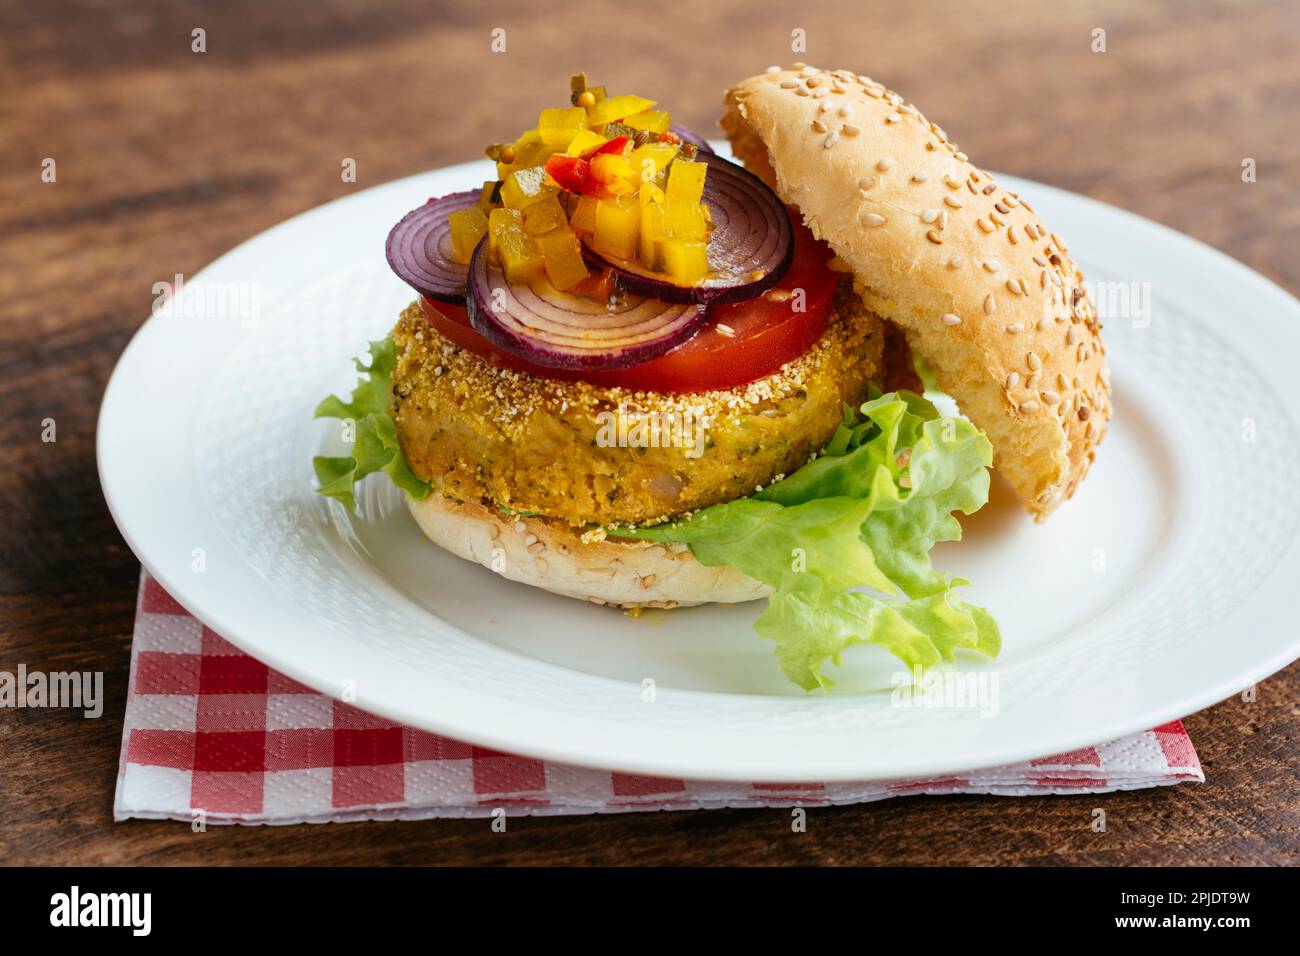 Home made Vegan Chickpea, Broccoli Burgers on Buns Stock Photo